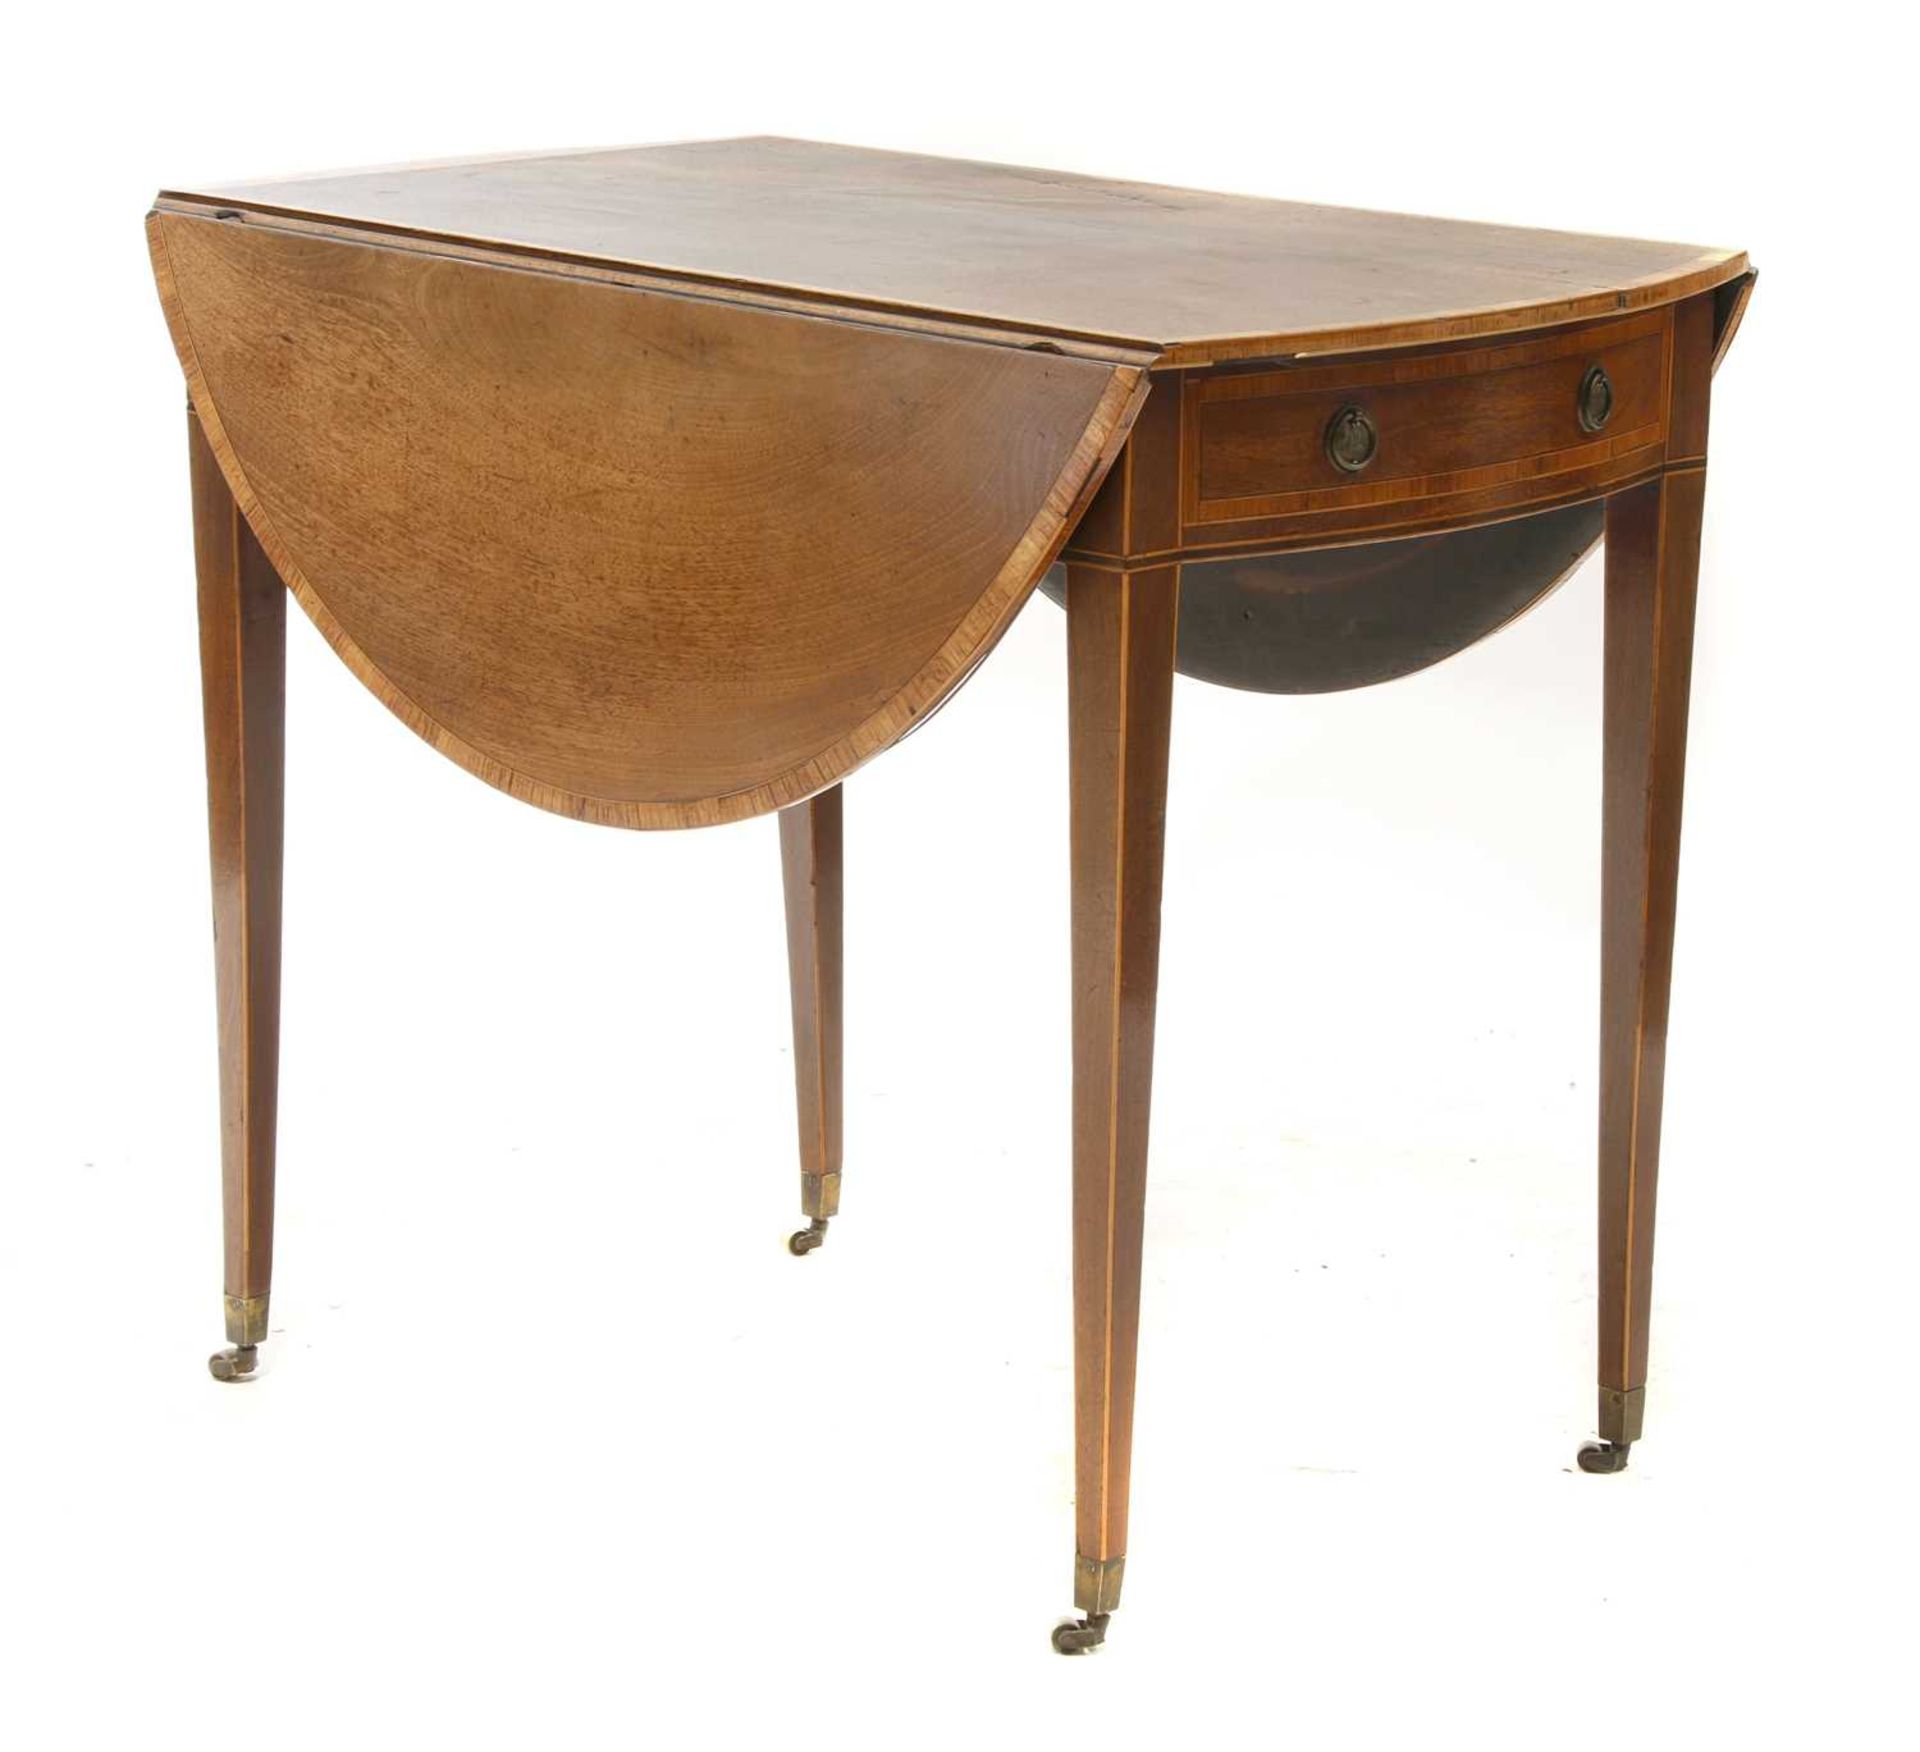 A Sheraton period mahogany oval Pembroke table,